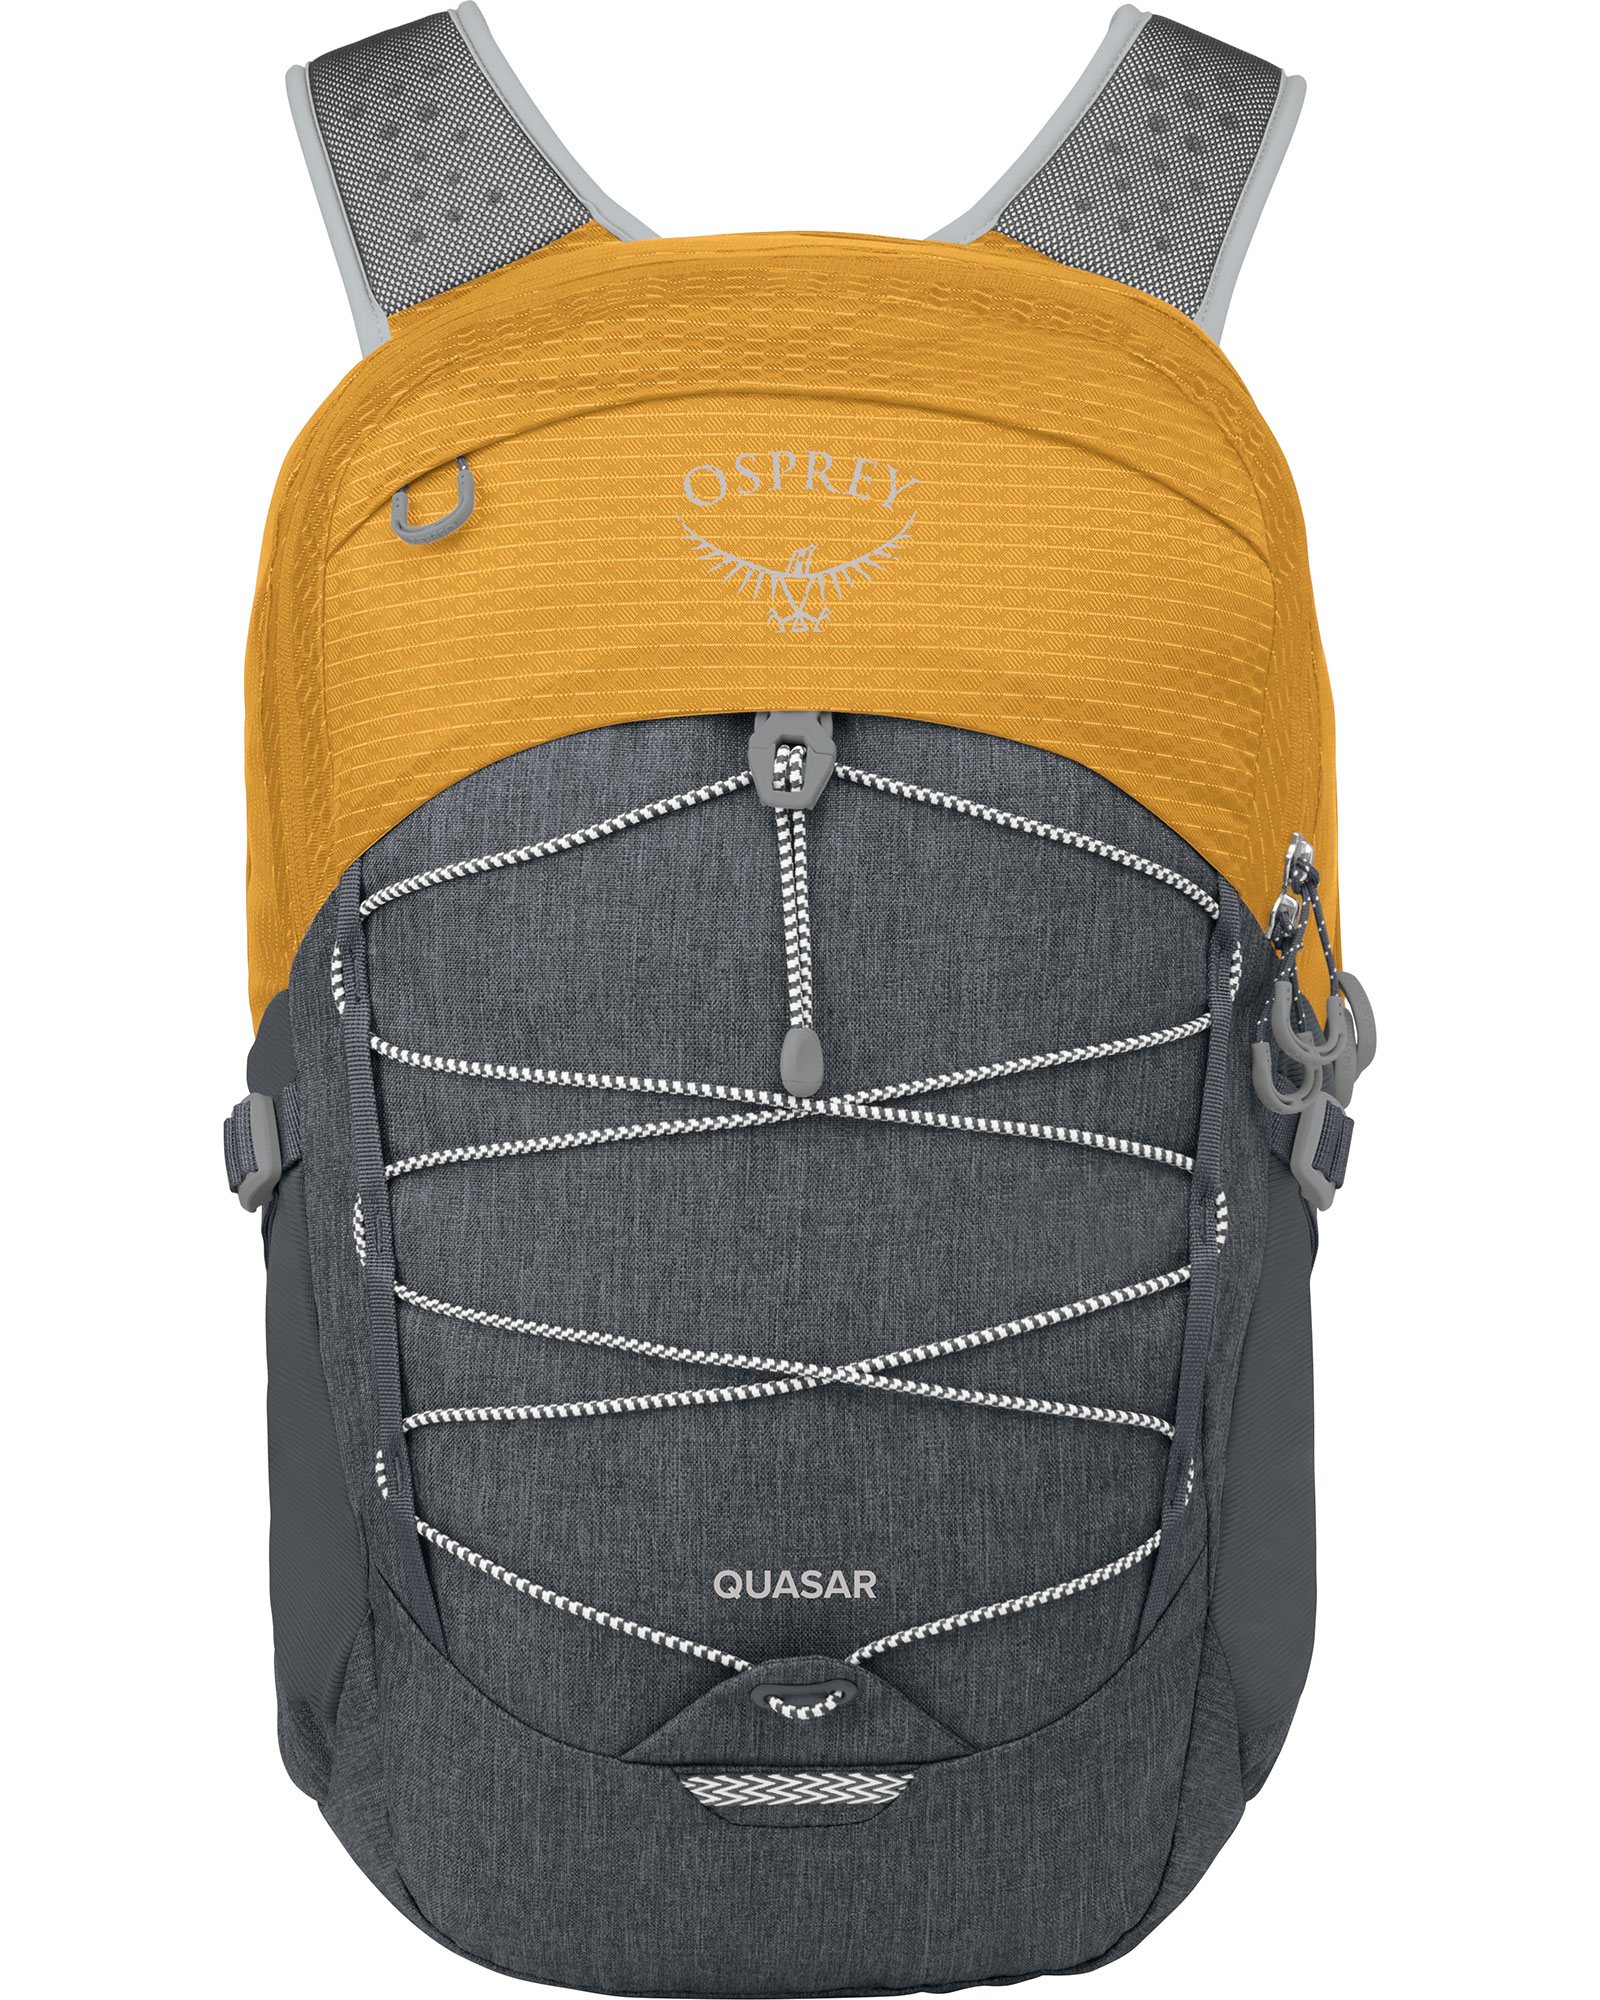 Osprey Quasar Backpack - Golden Hour Yellow/Grey Area